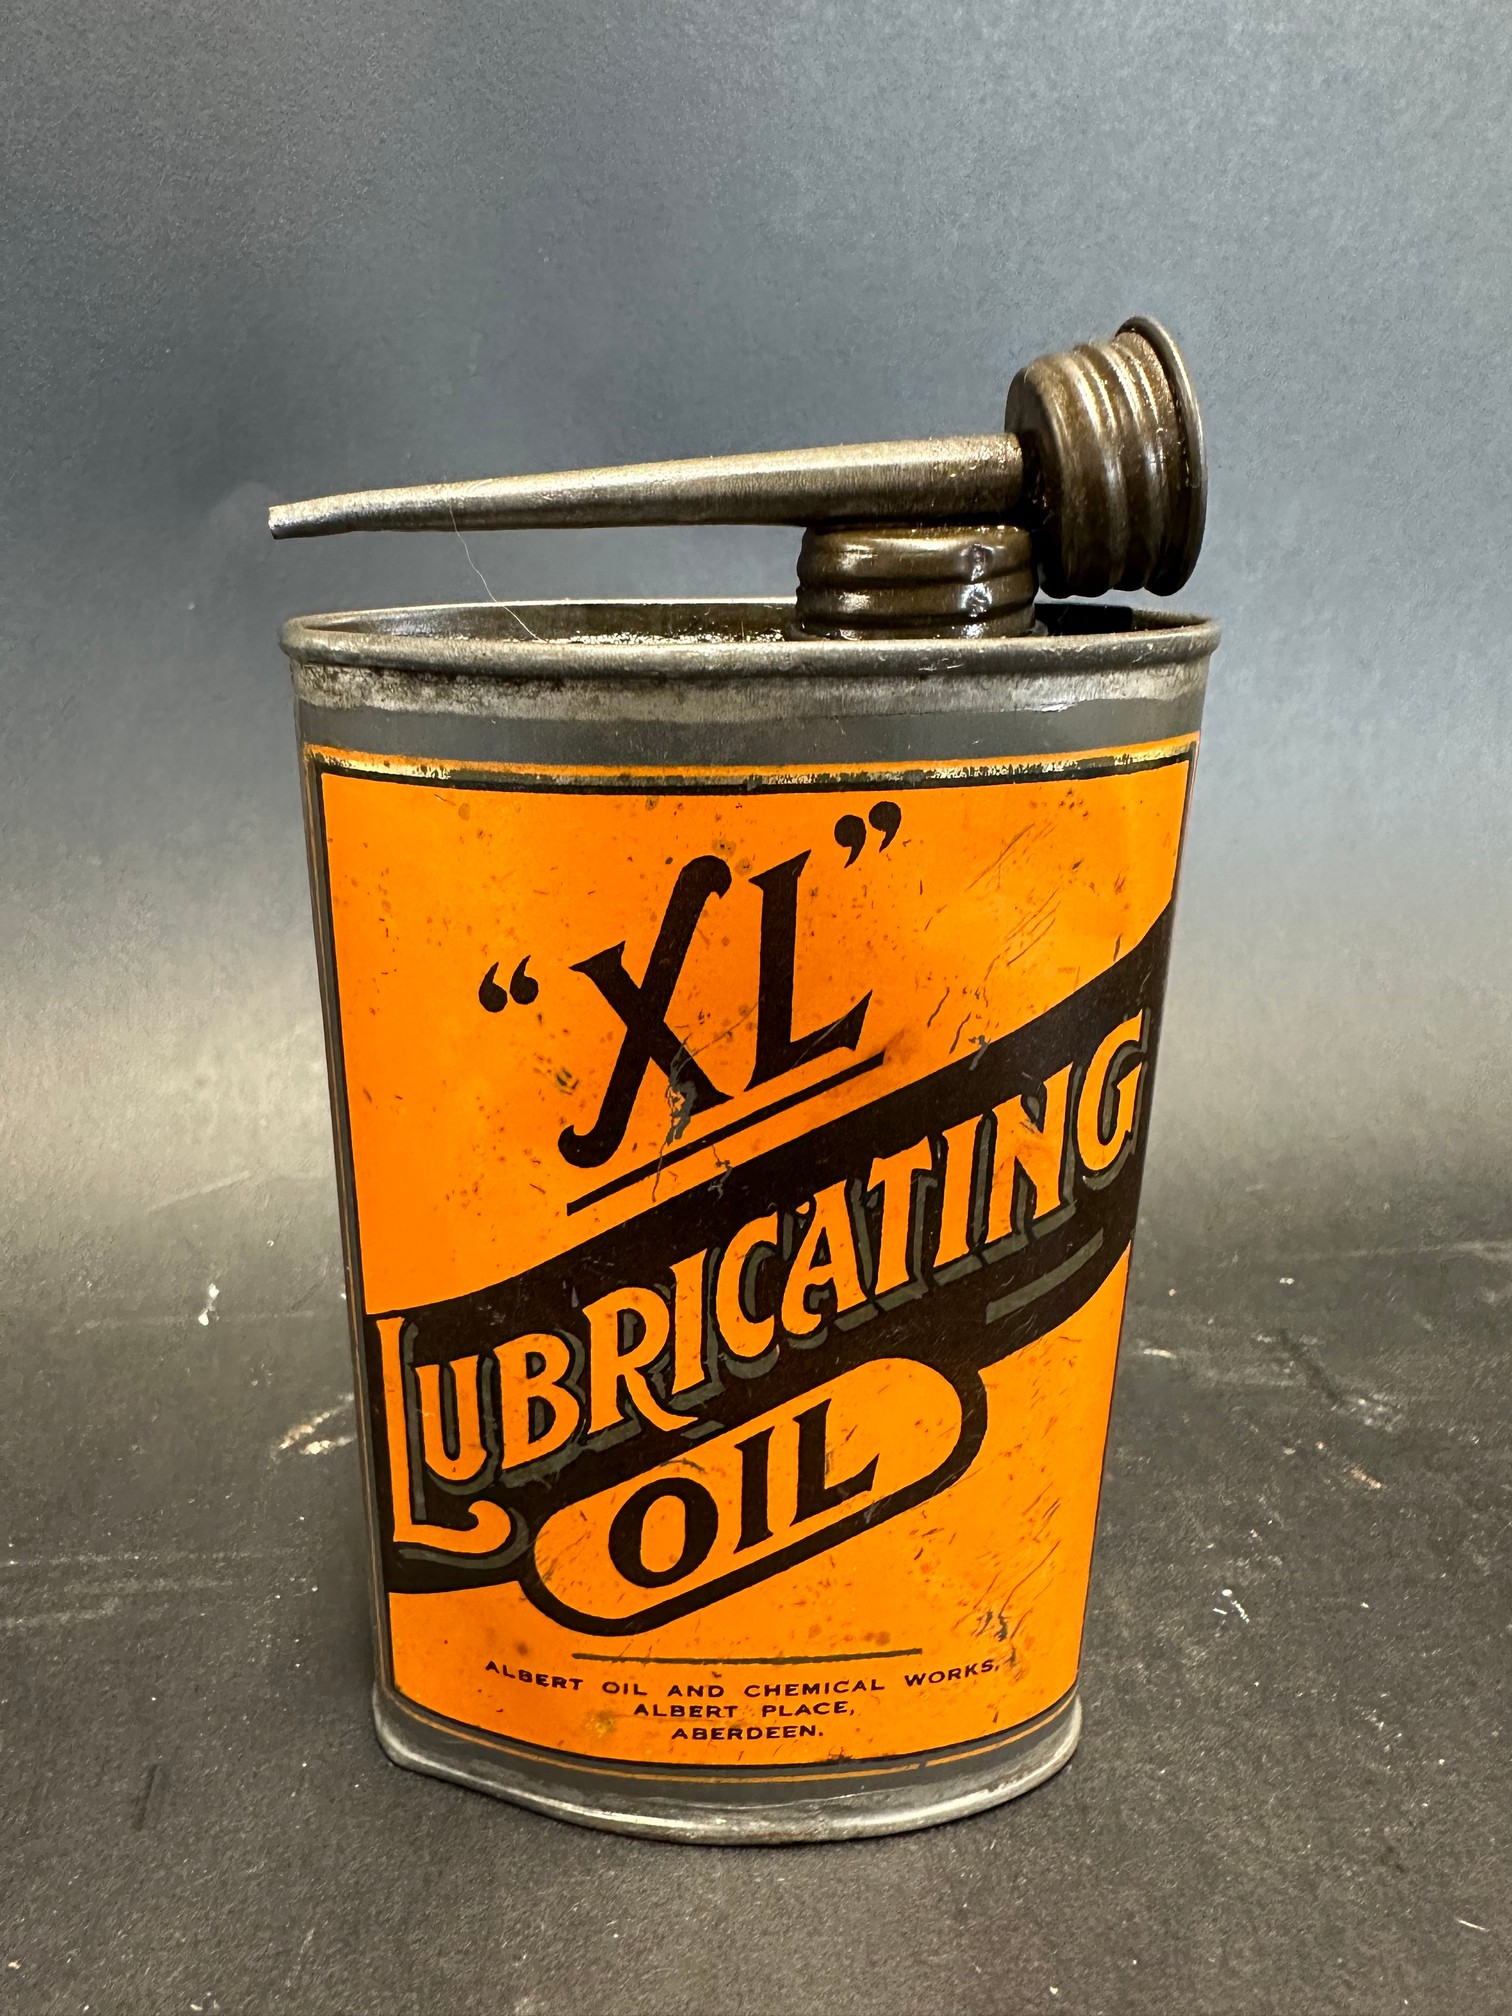 An XL Lubricating Oil oval tin.